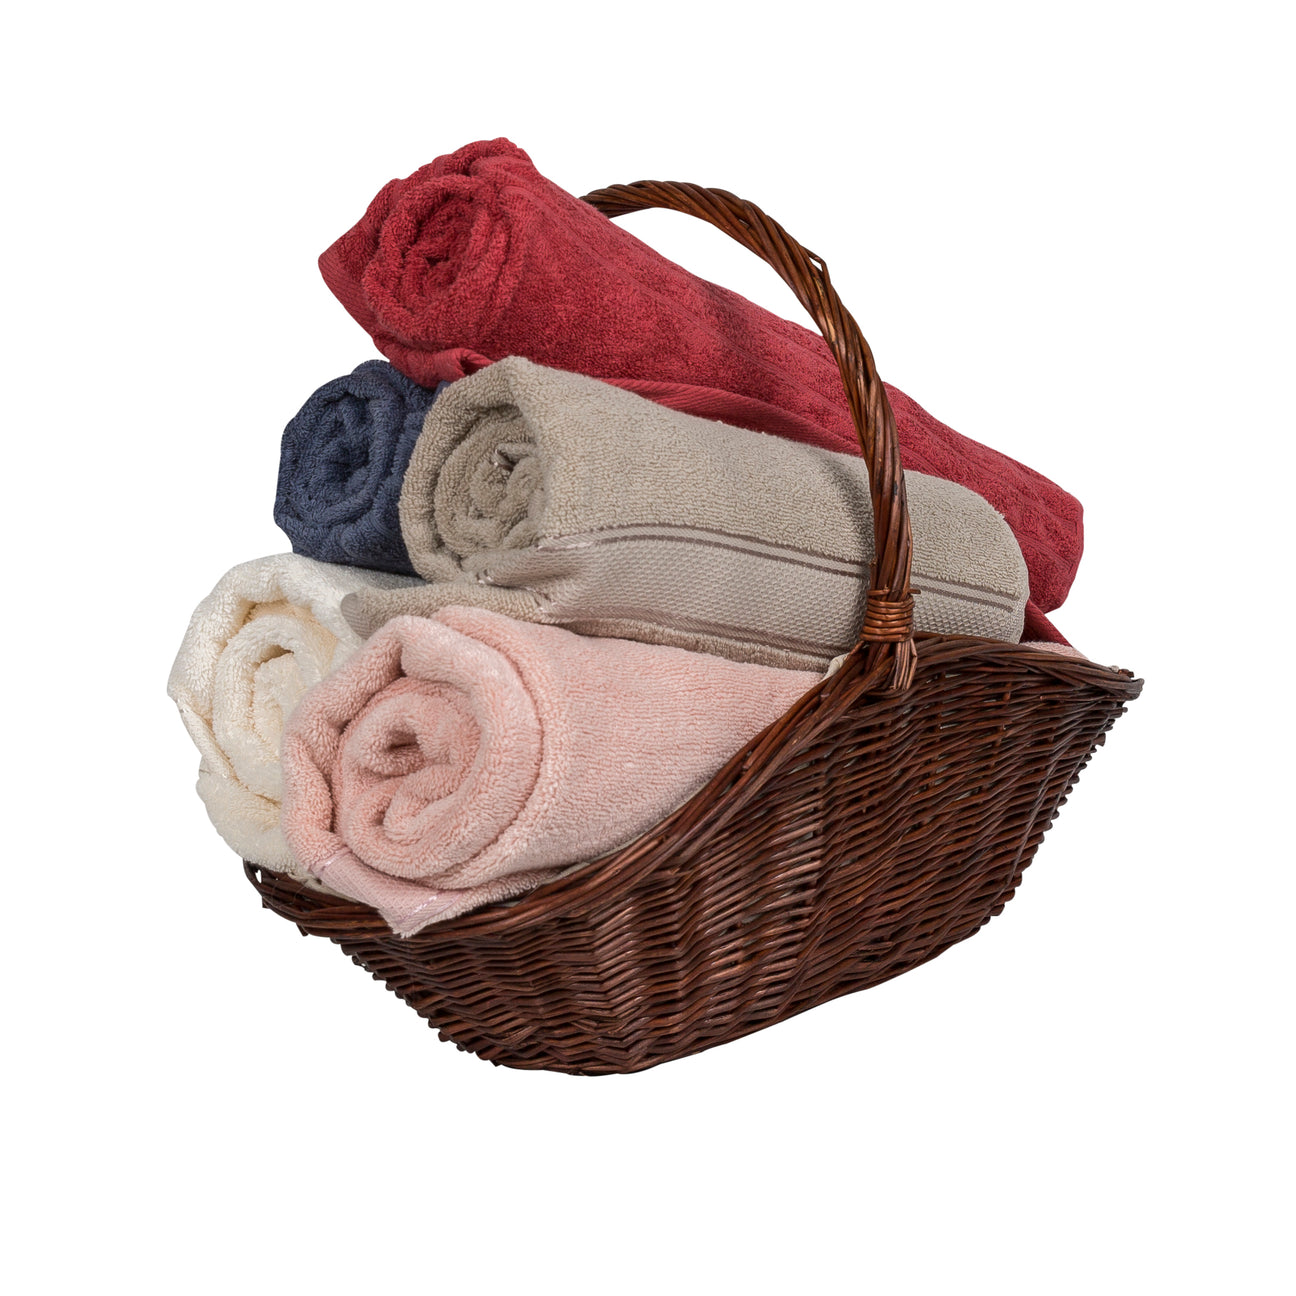 Image of Wicker basket holding an arrangement of towels